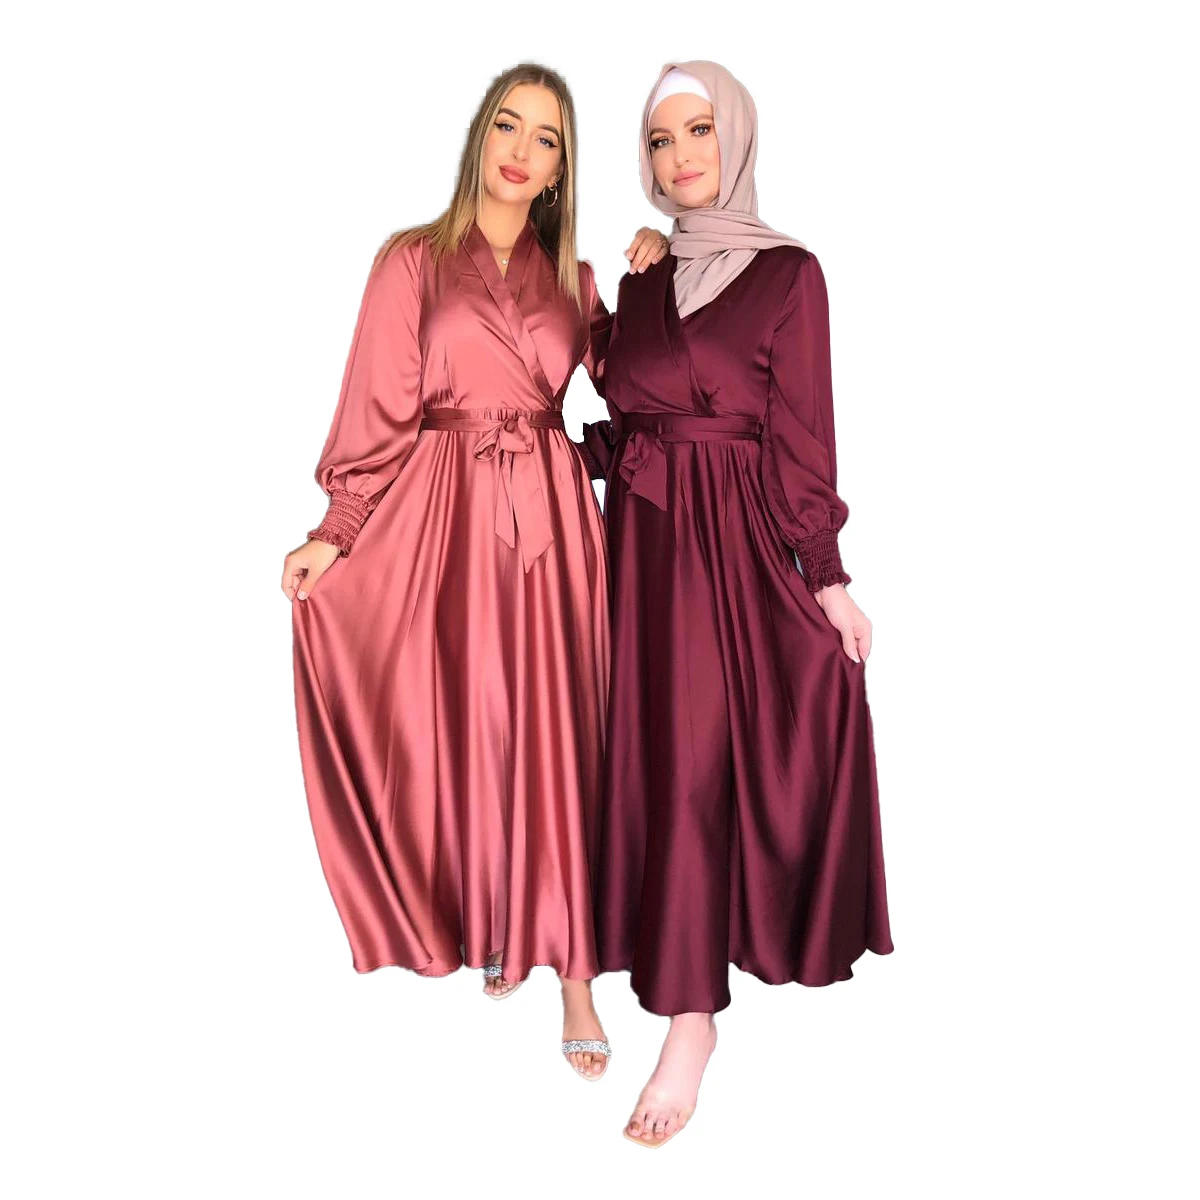 

MOTIVE FORCE New Long Sleeve Islamic Dress Plain Satin Abaya Muslim Dress For Women, Picture